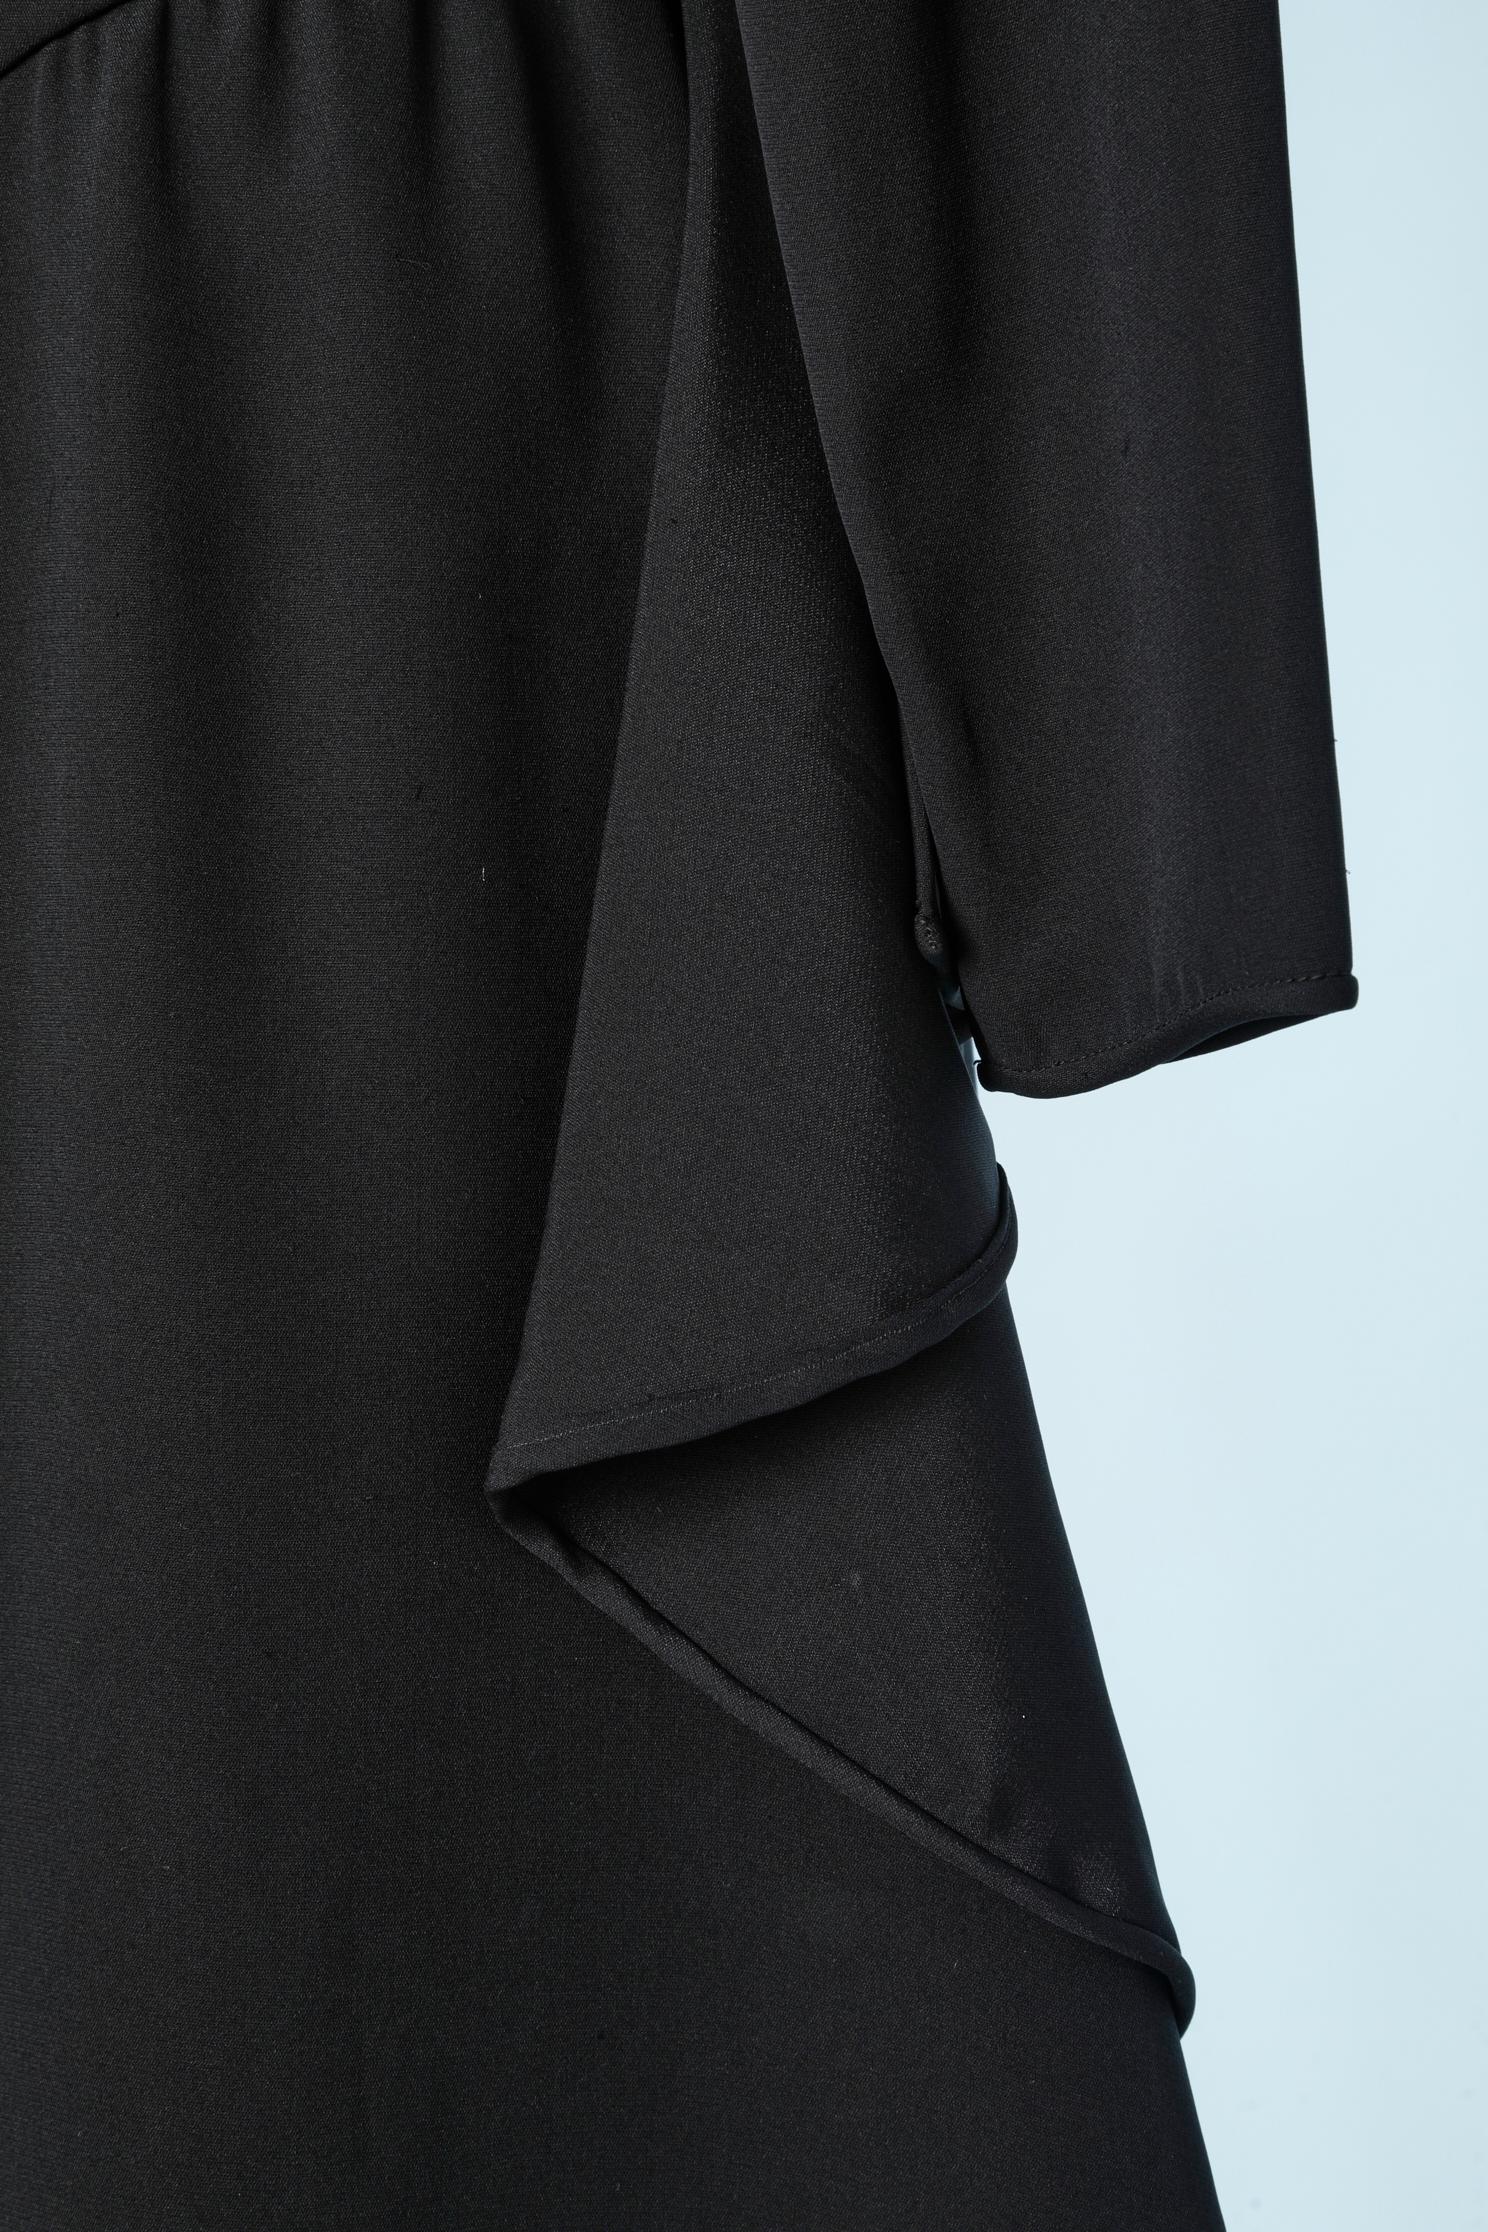 Black Asymmetrical black cocktail dress draped on one shoulder Valentino Boutique  For Sale